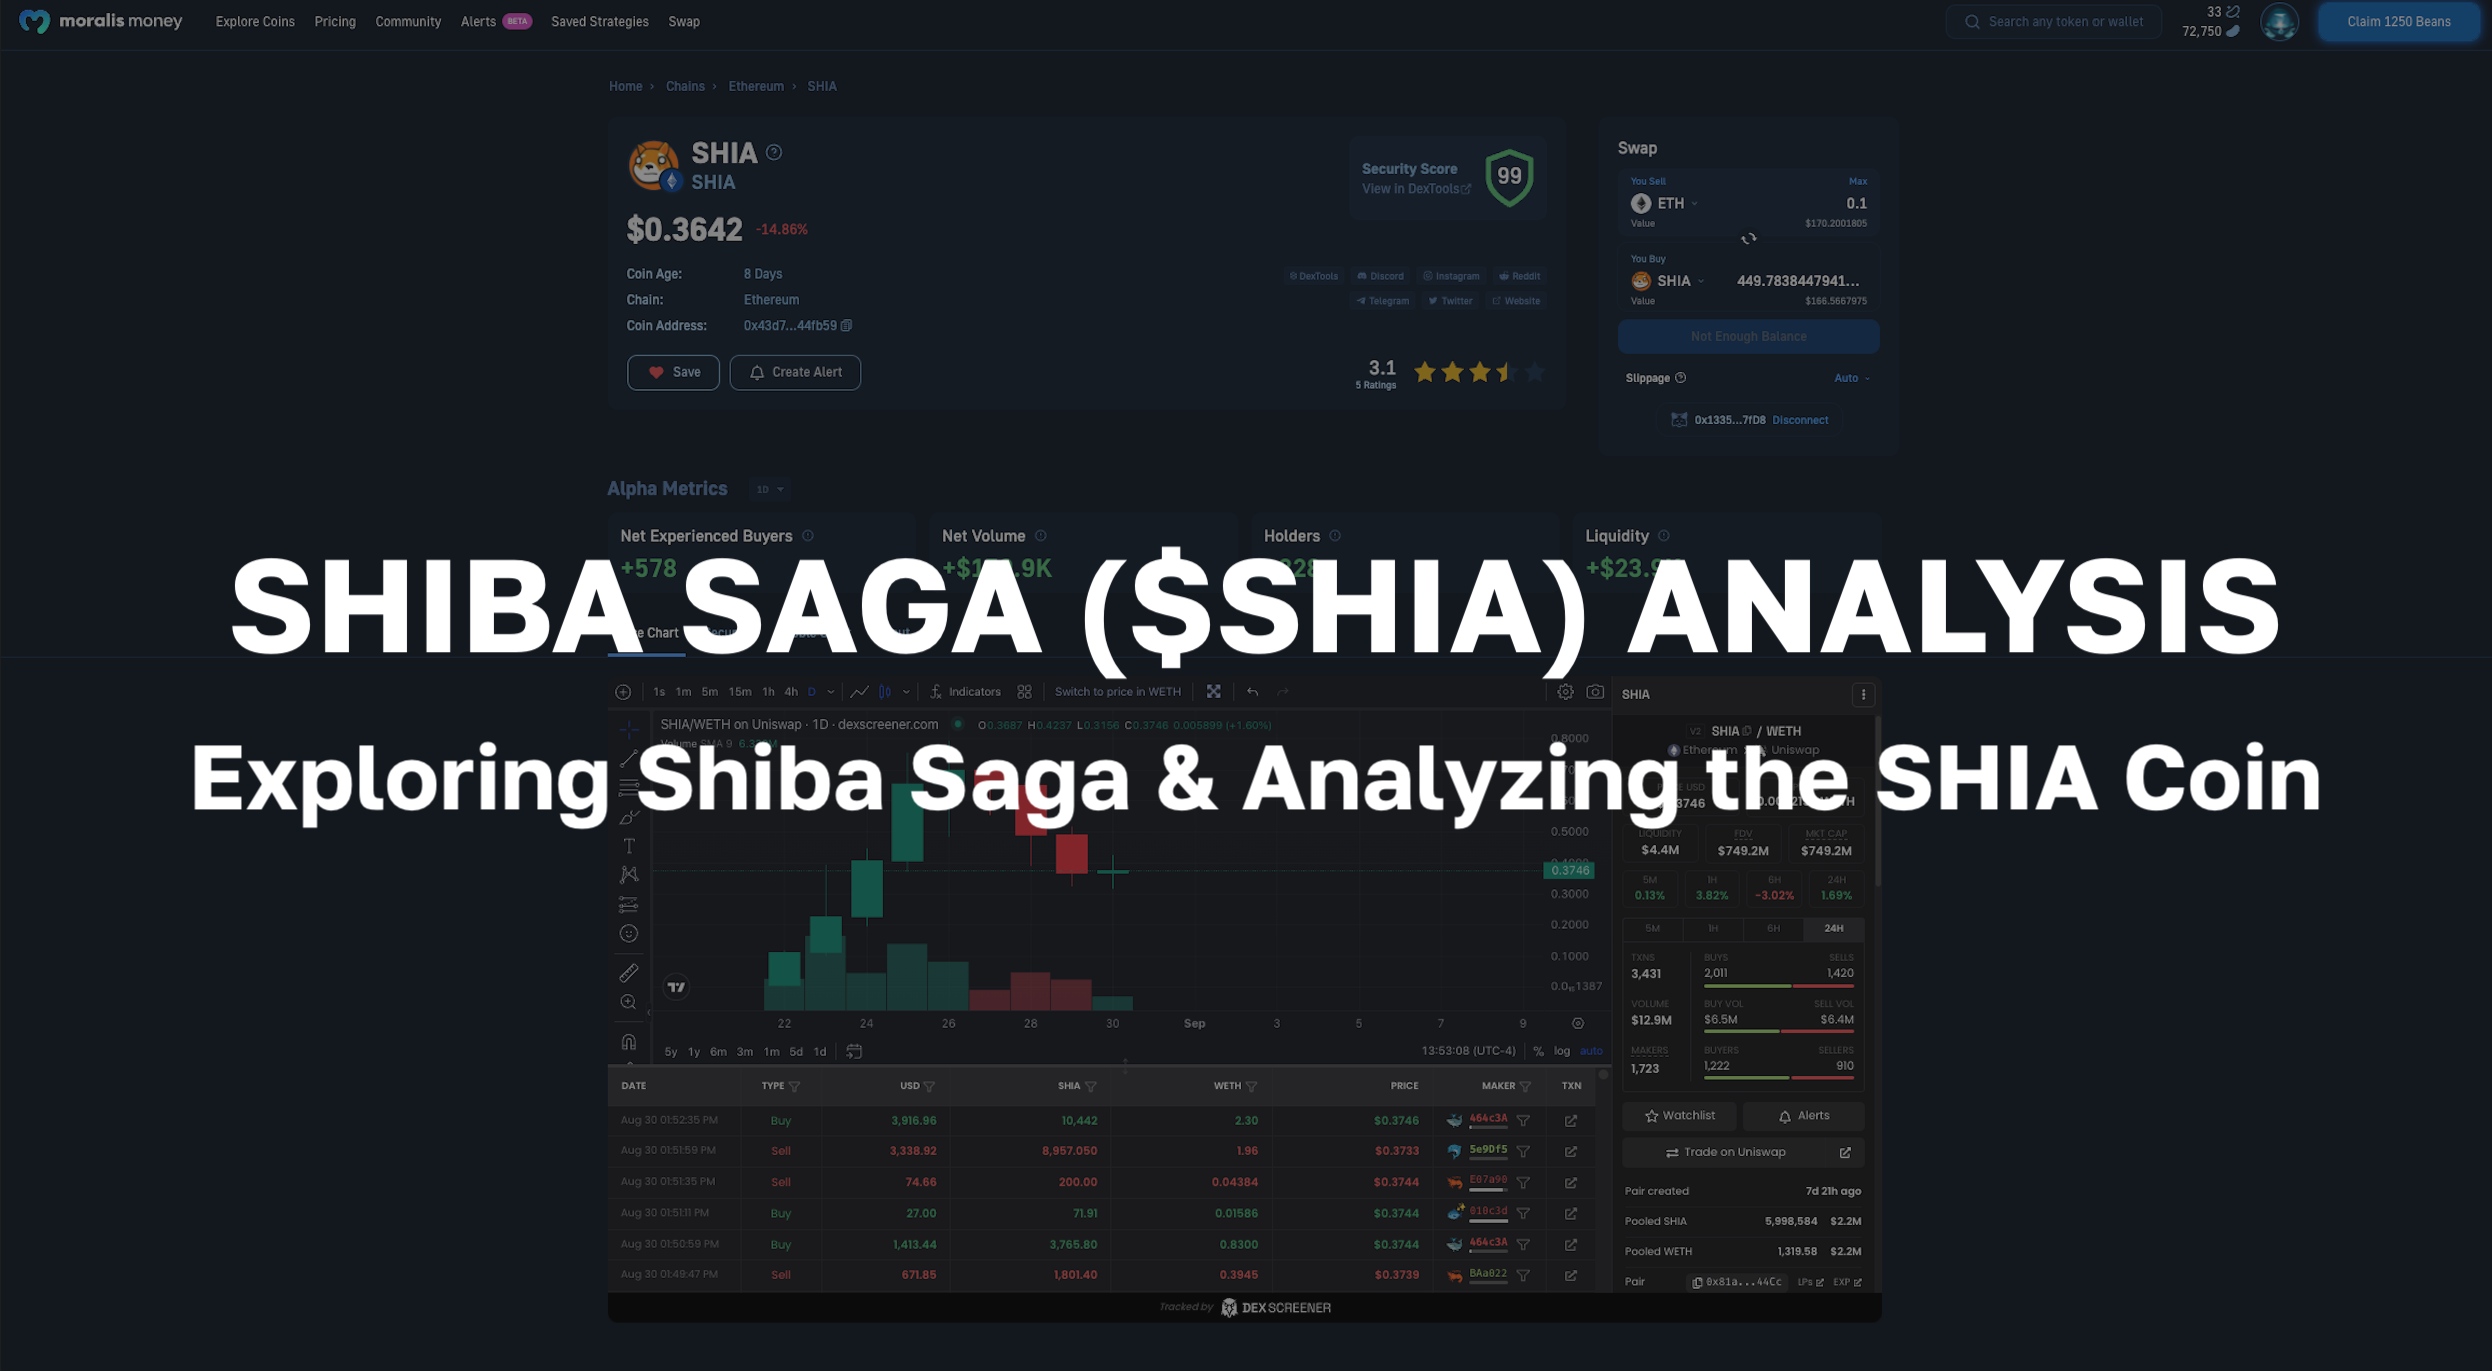 Exploring the Shiba Saga Project & Analyzing the SHIA Coin